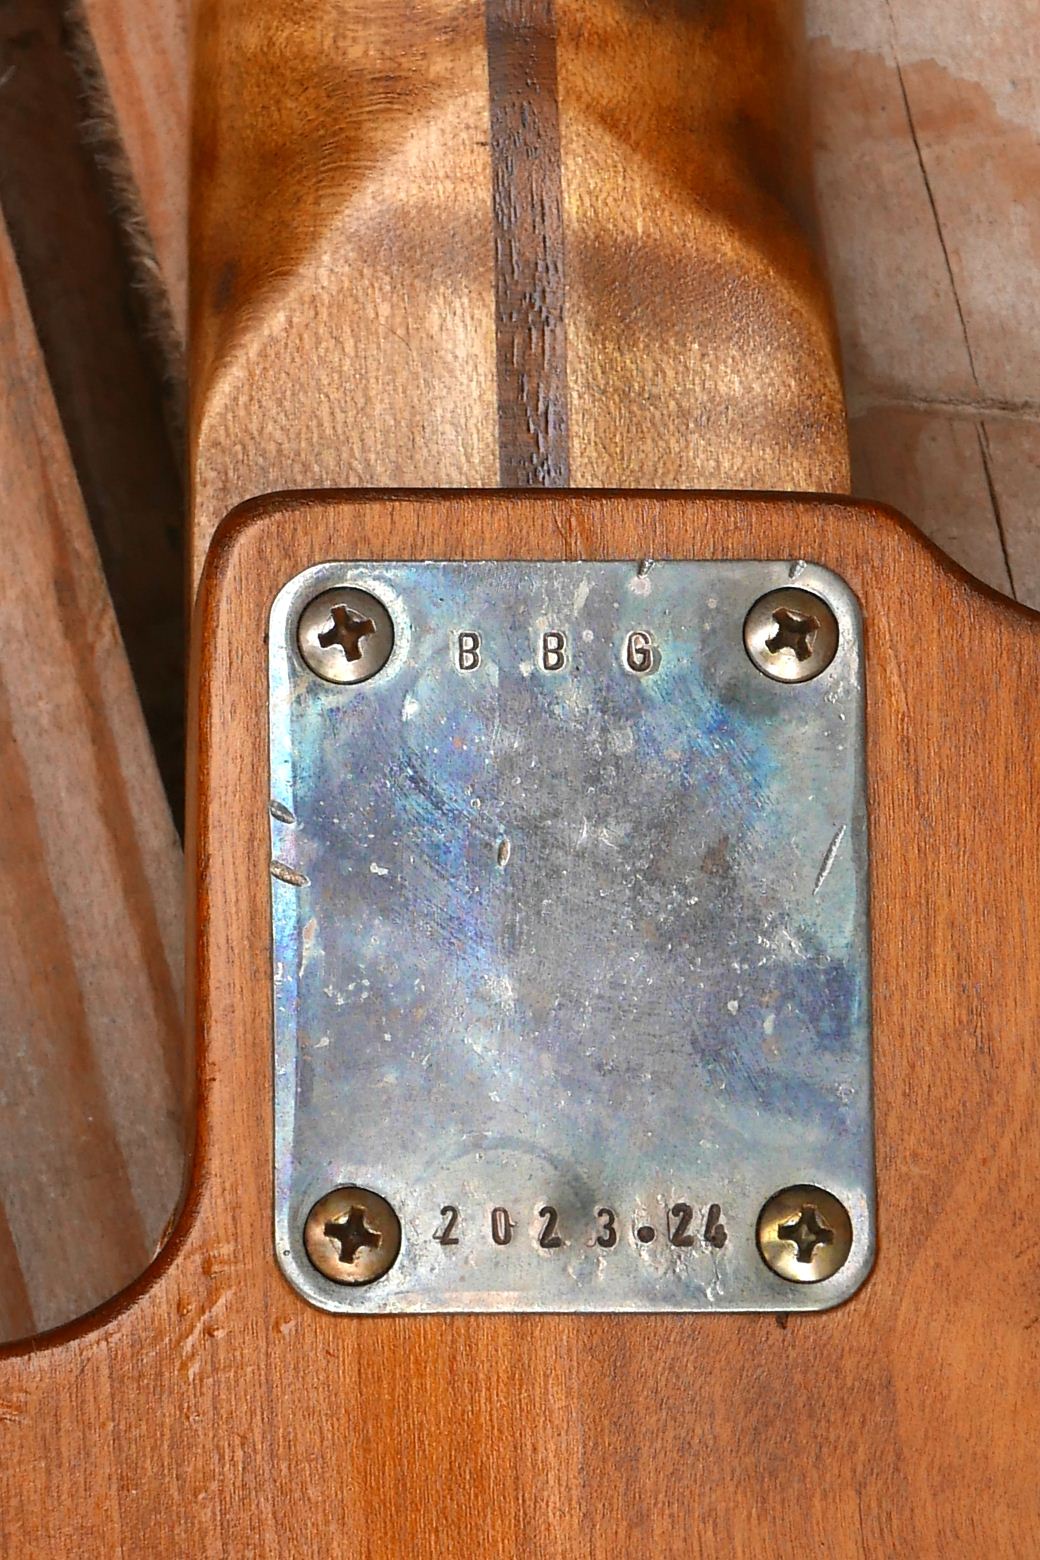 neckplate serial number